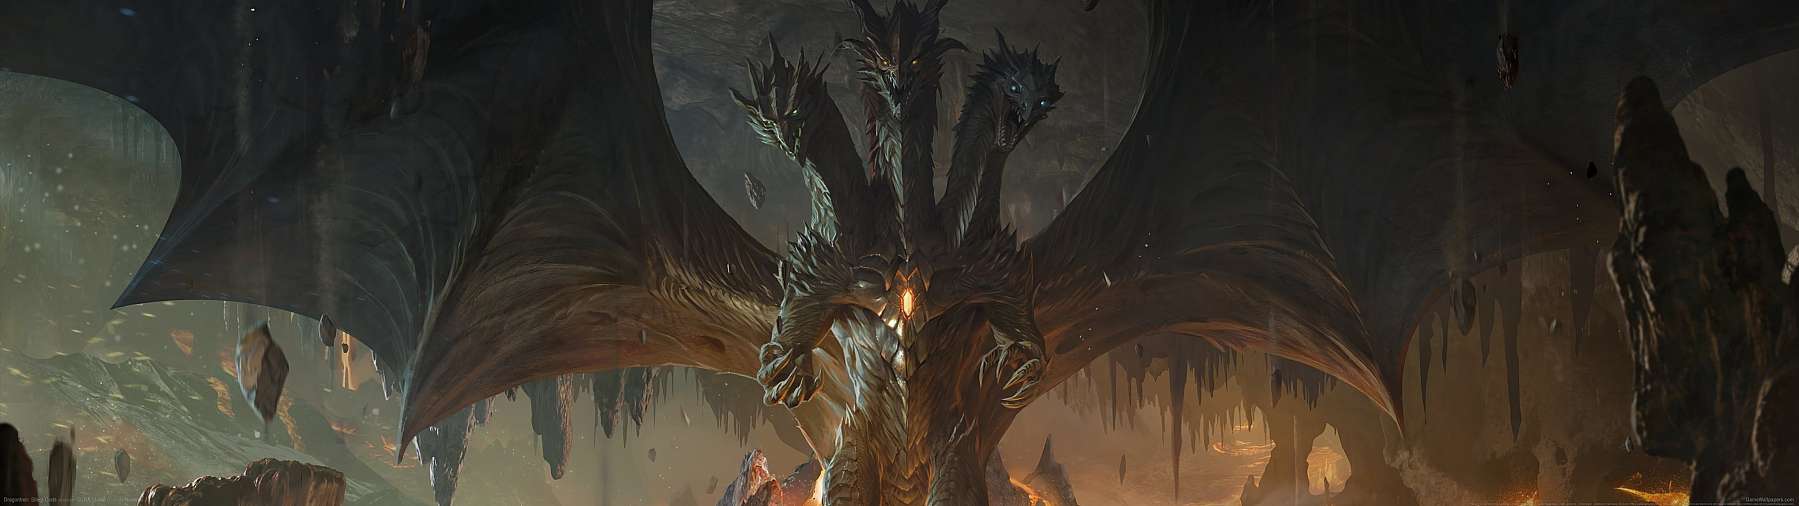 Dragonheir: Silent Gods superwide fond d'cran 02